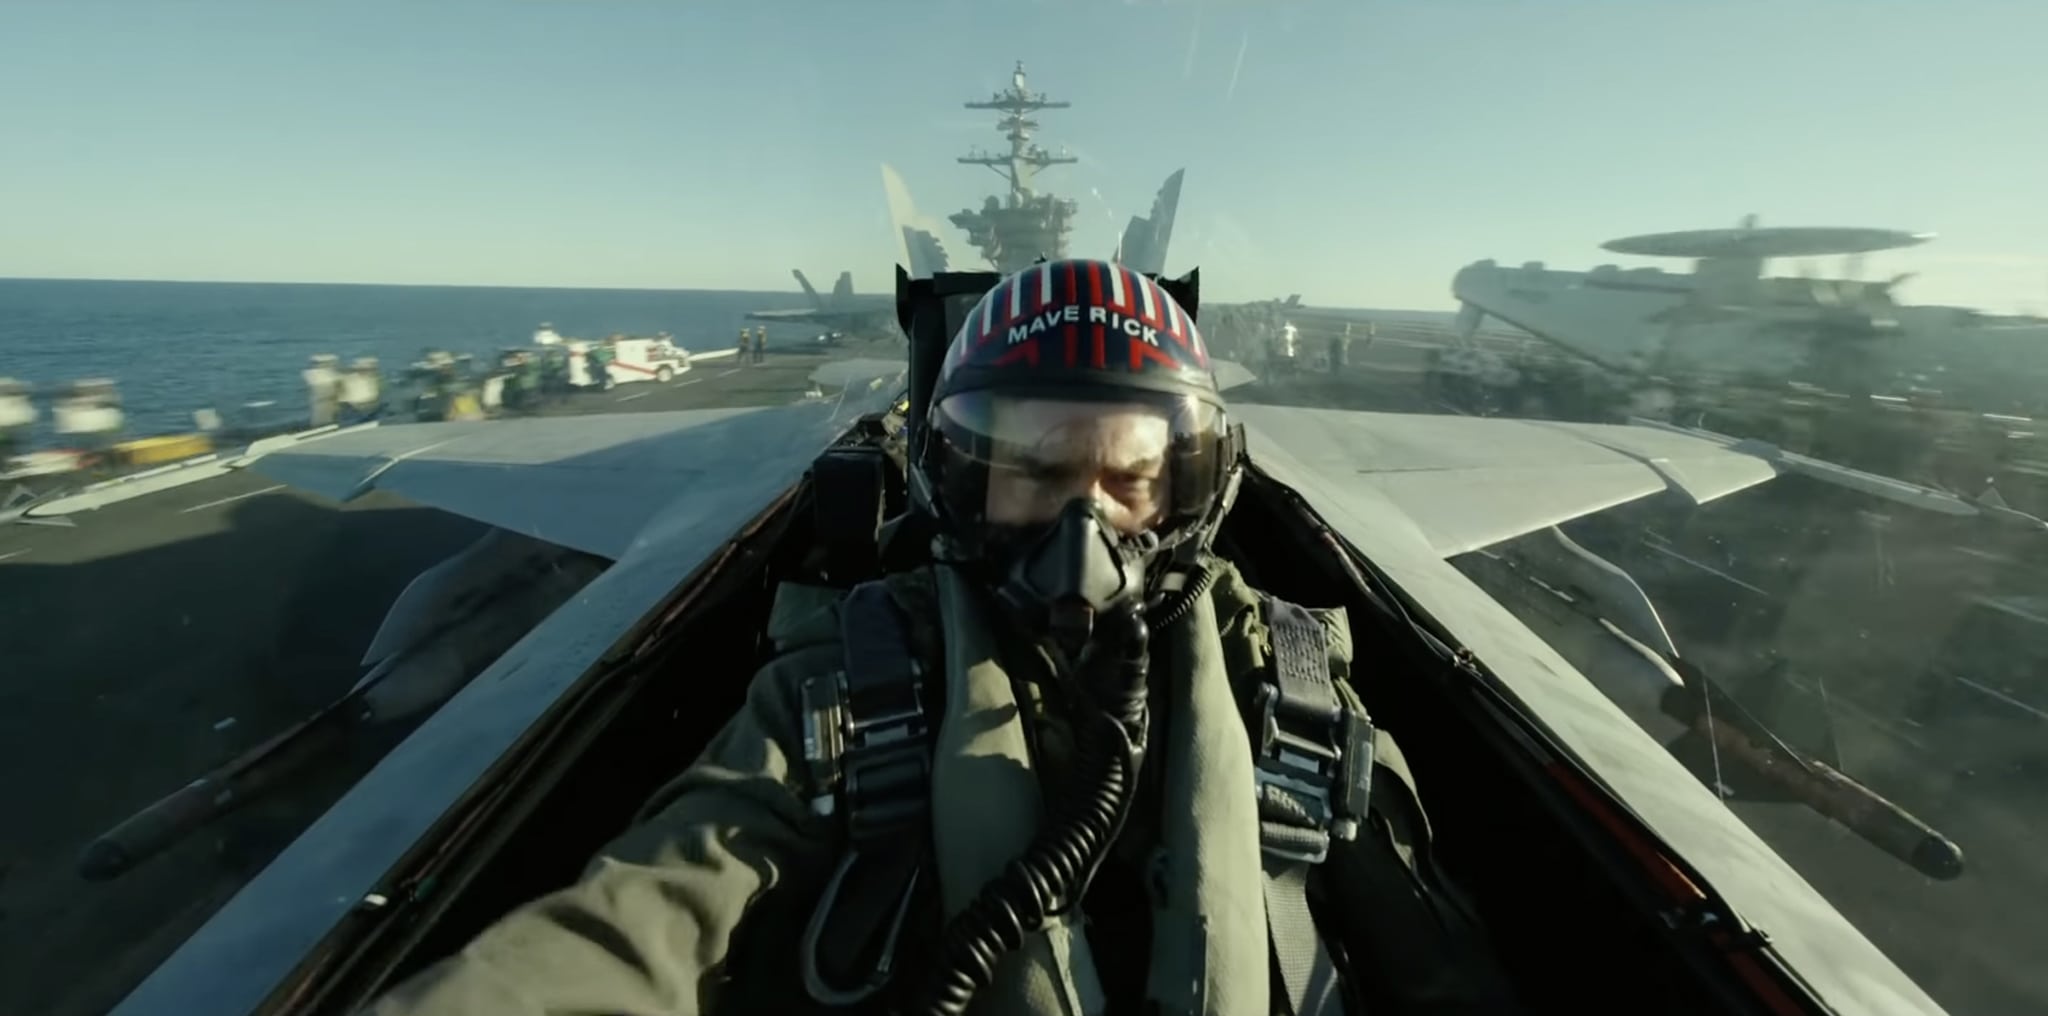 Tom Cruise returns as Pete “Maverick” Mitchell in the Top Gun sequel, Top Gun: Maverick